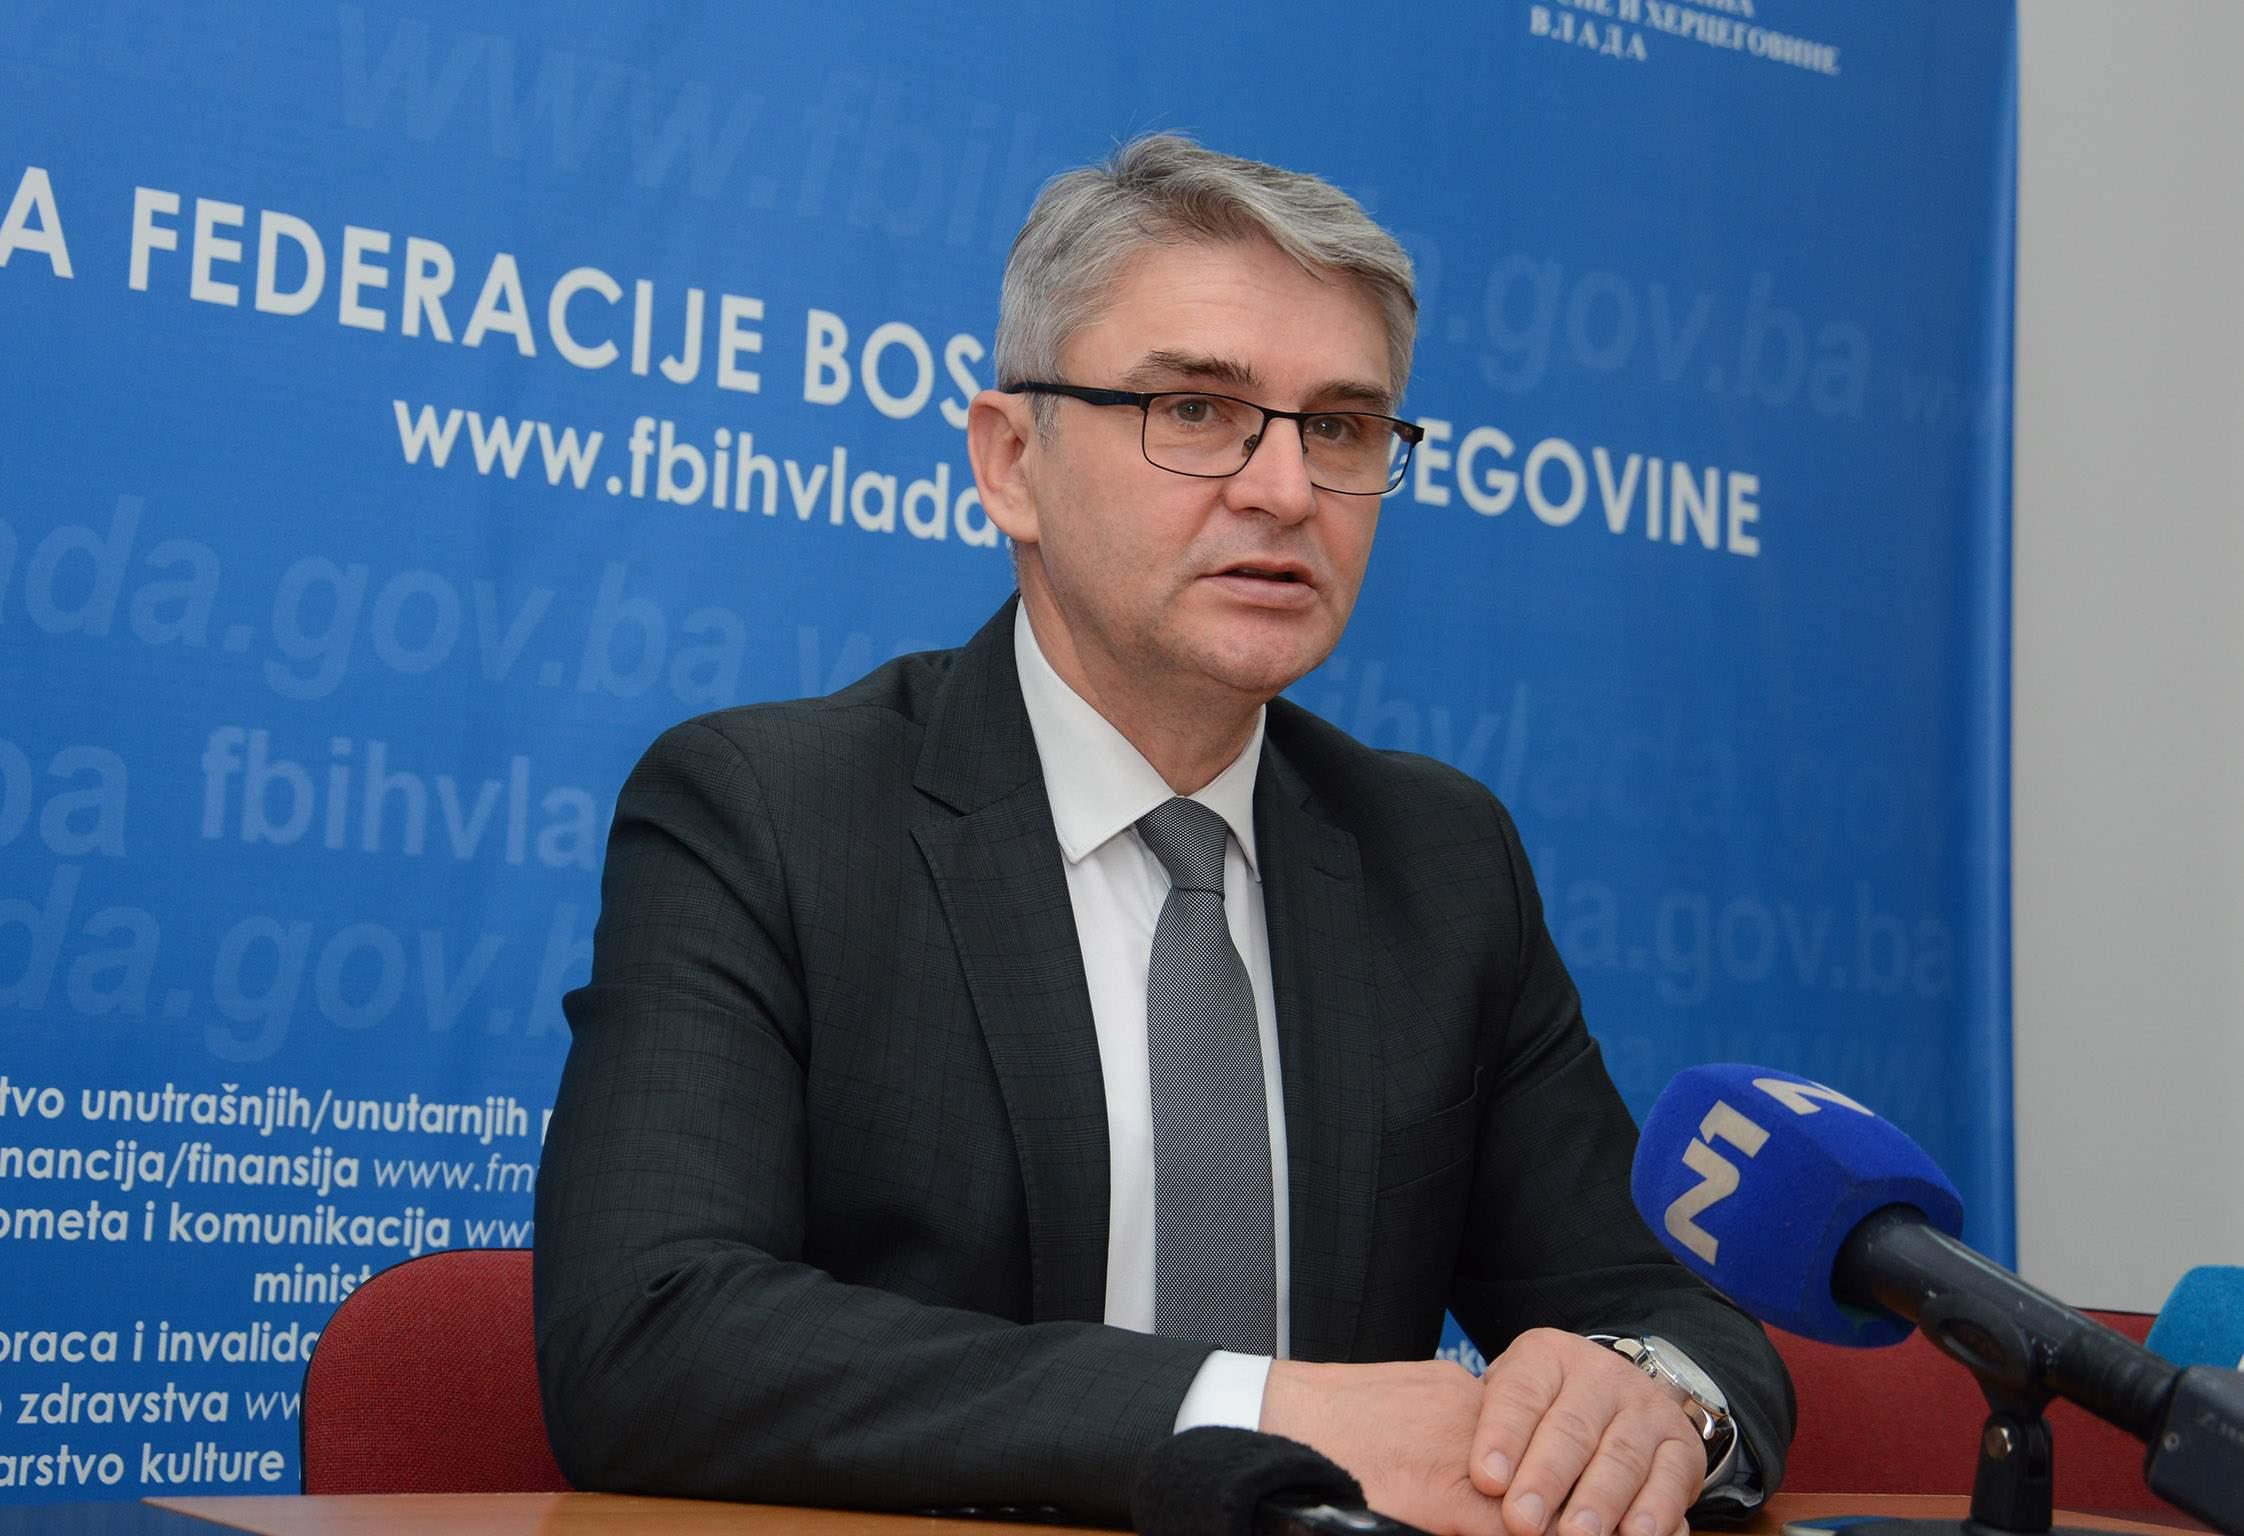 Danas komemoracija, dženaza i ukop ministra Bukvarevića